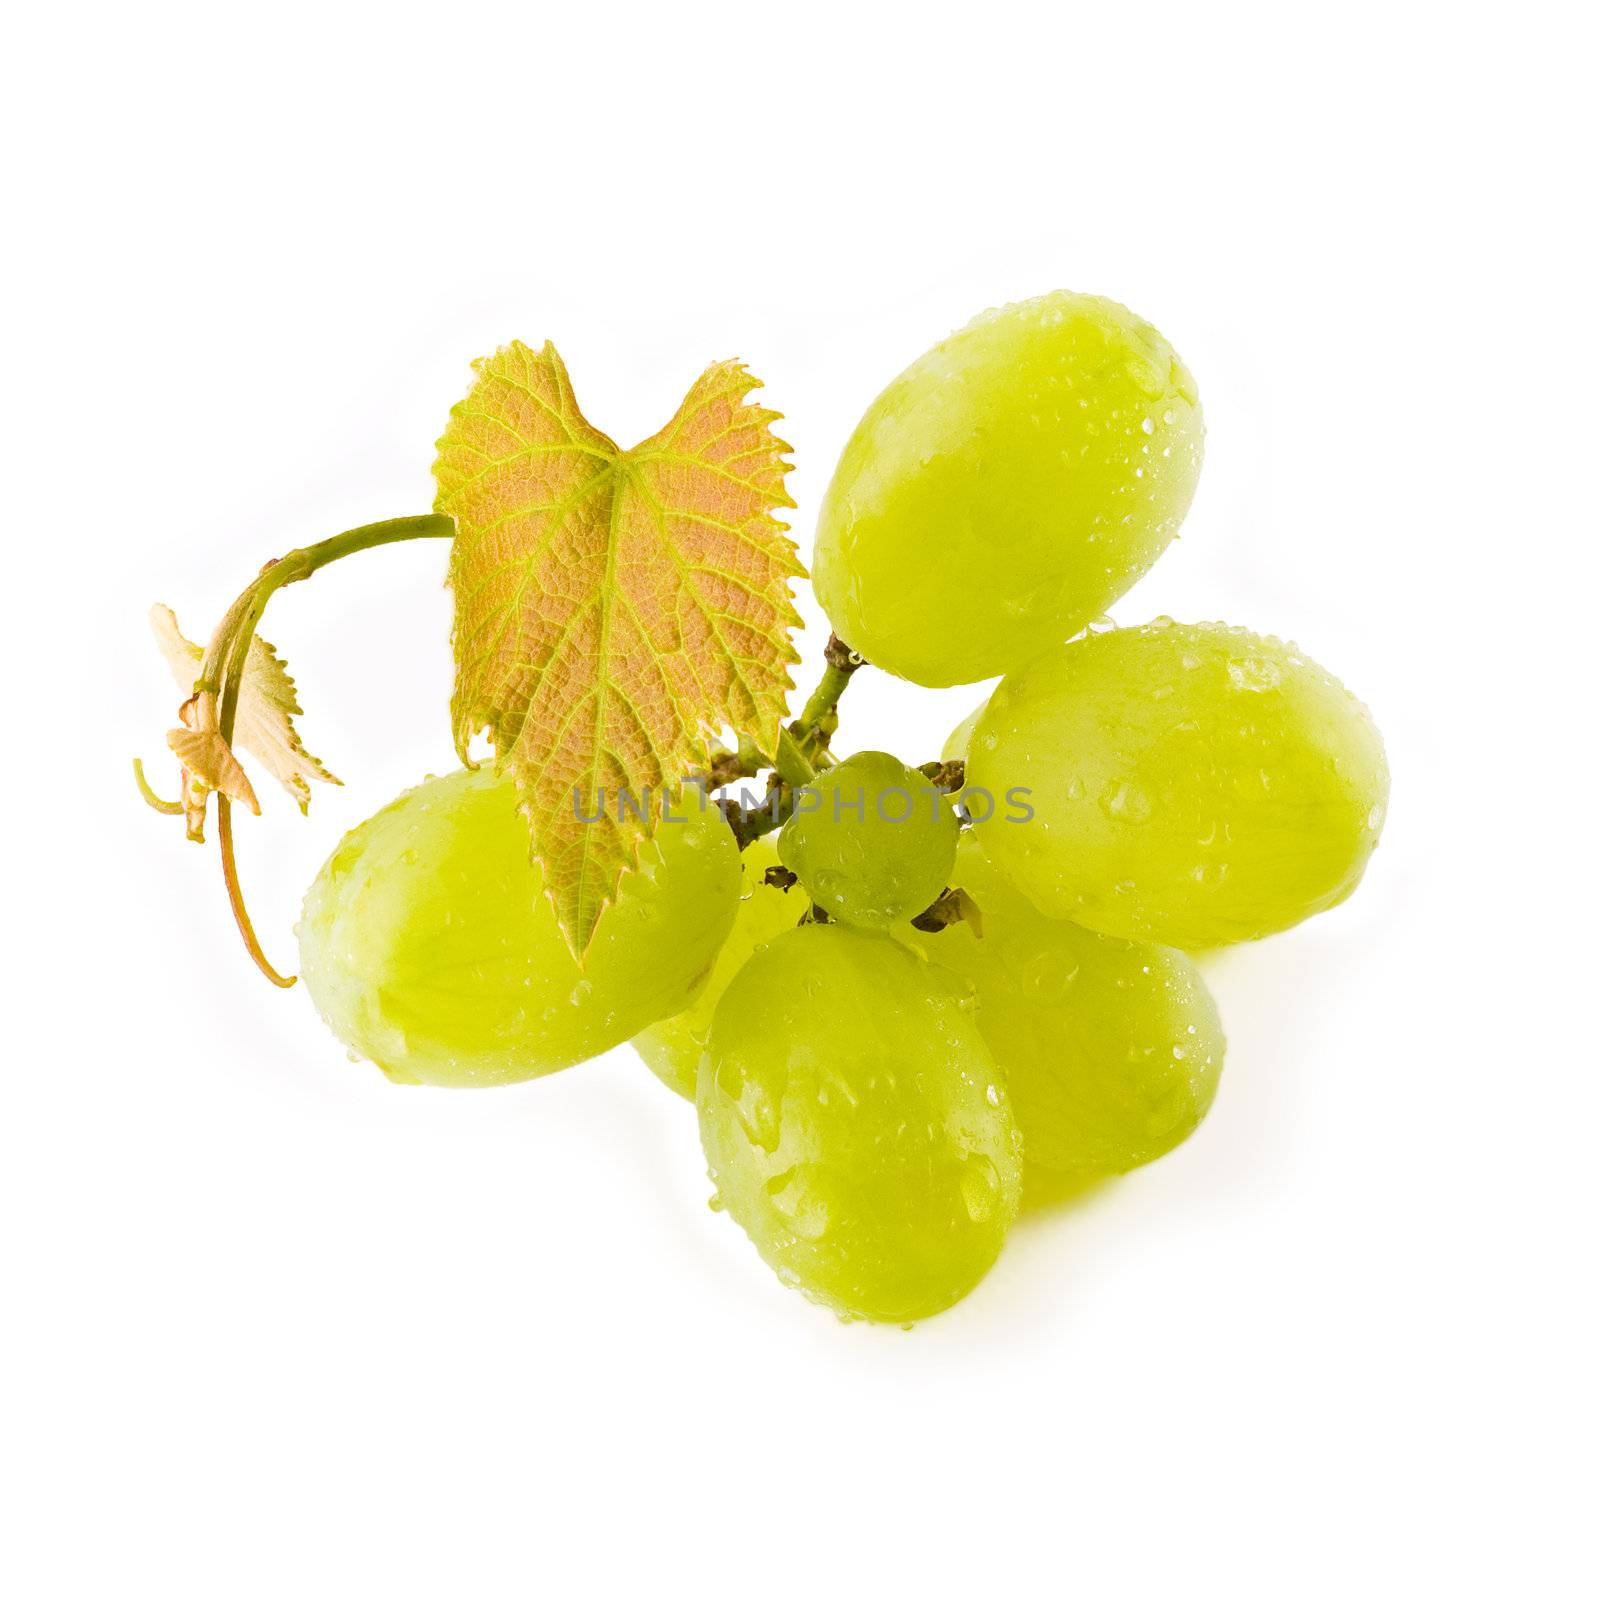 Green grapes by Gbuglok